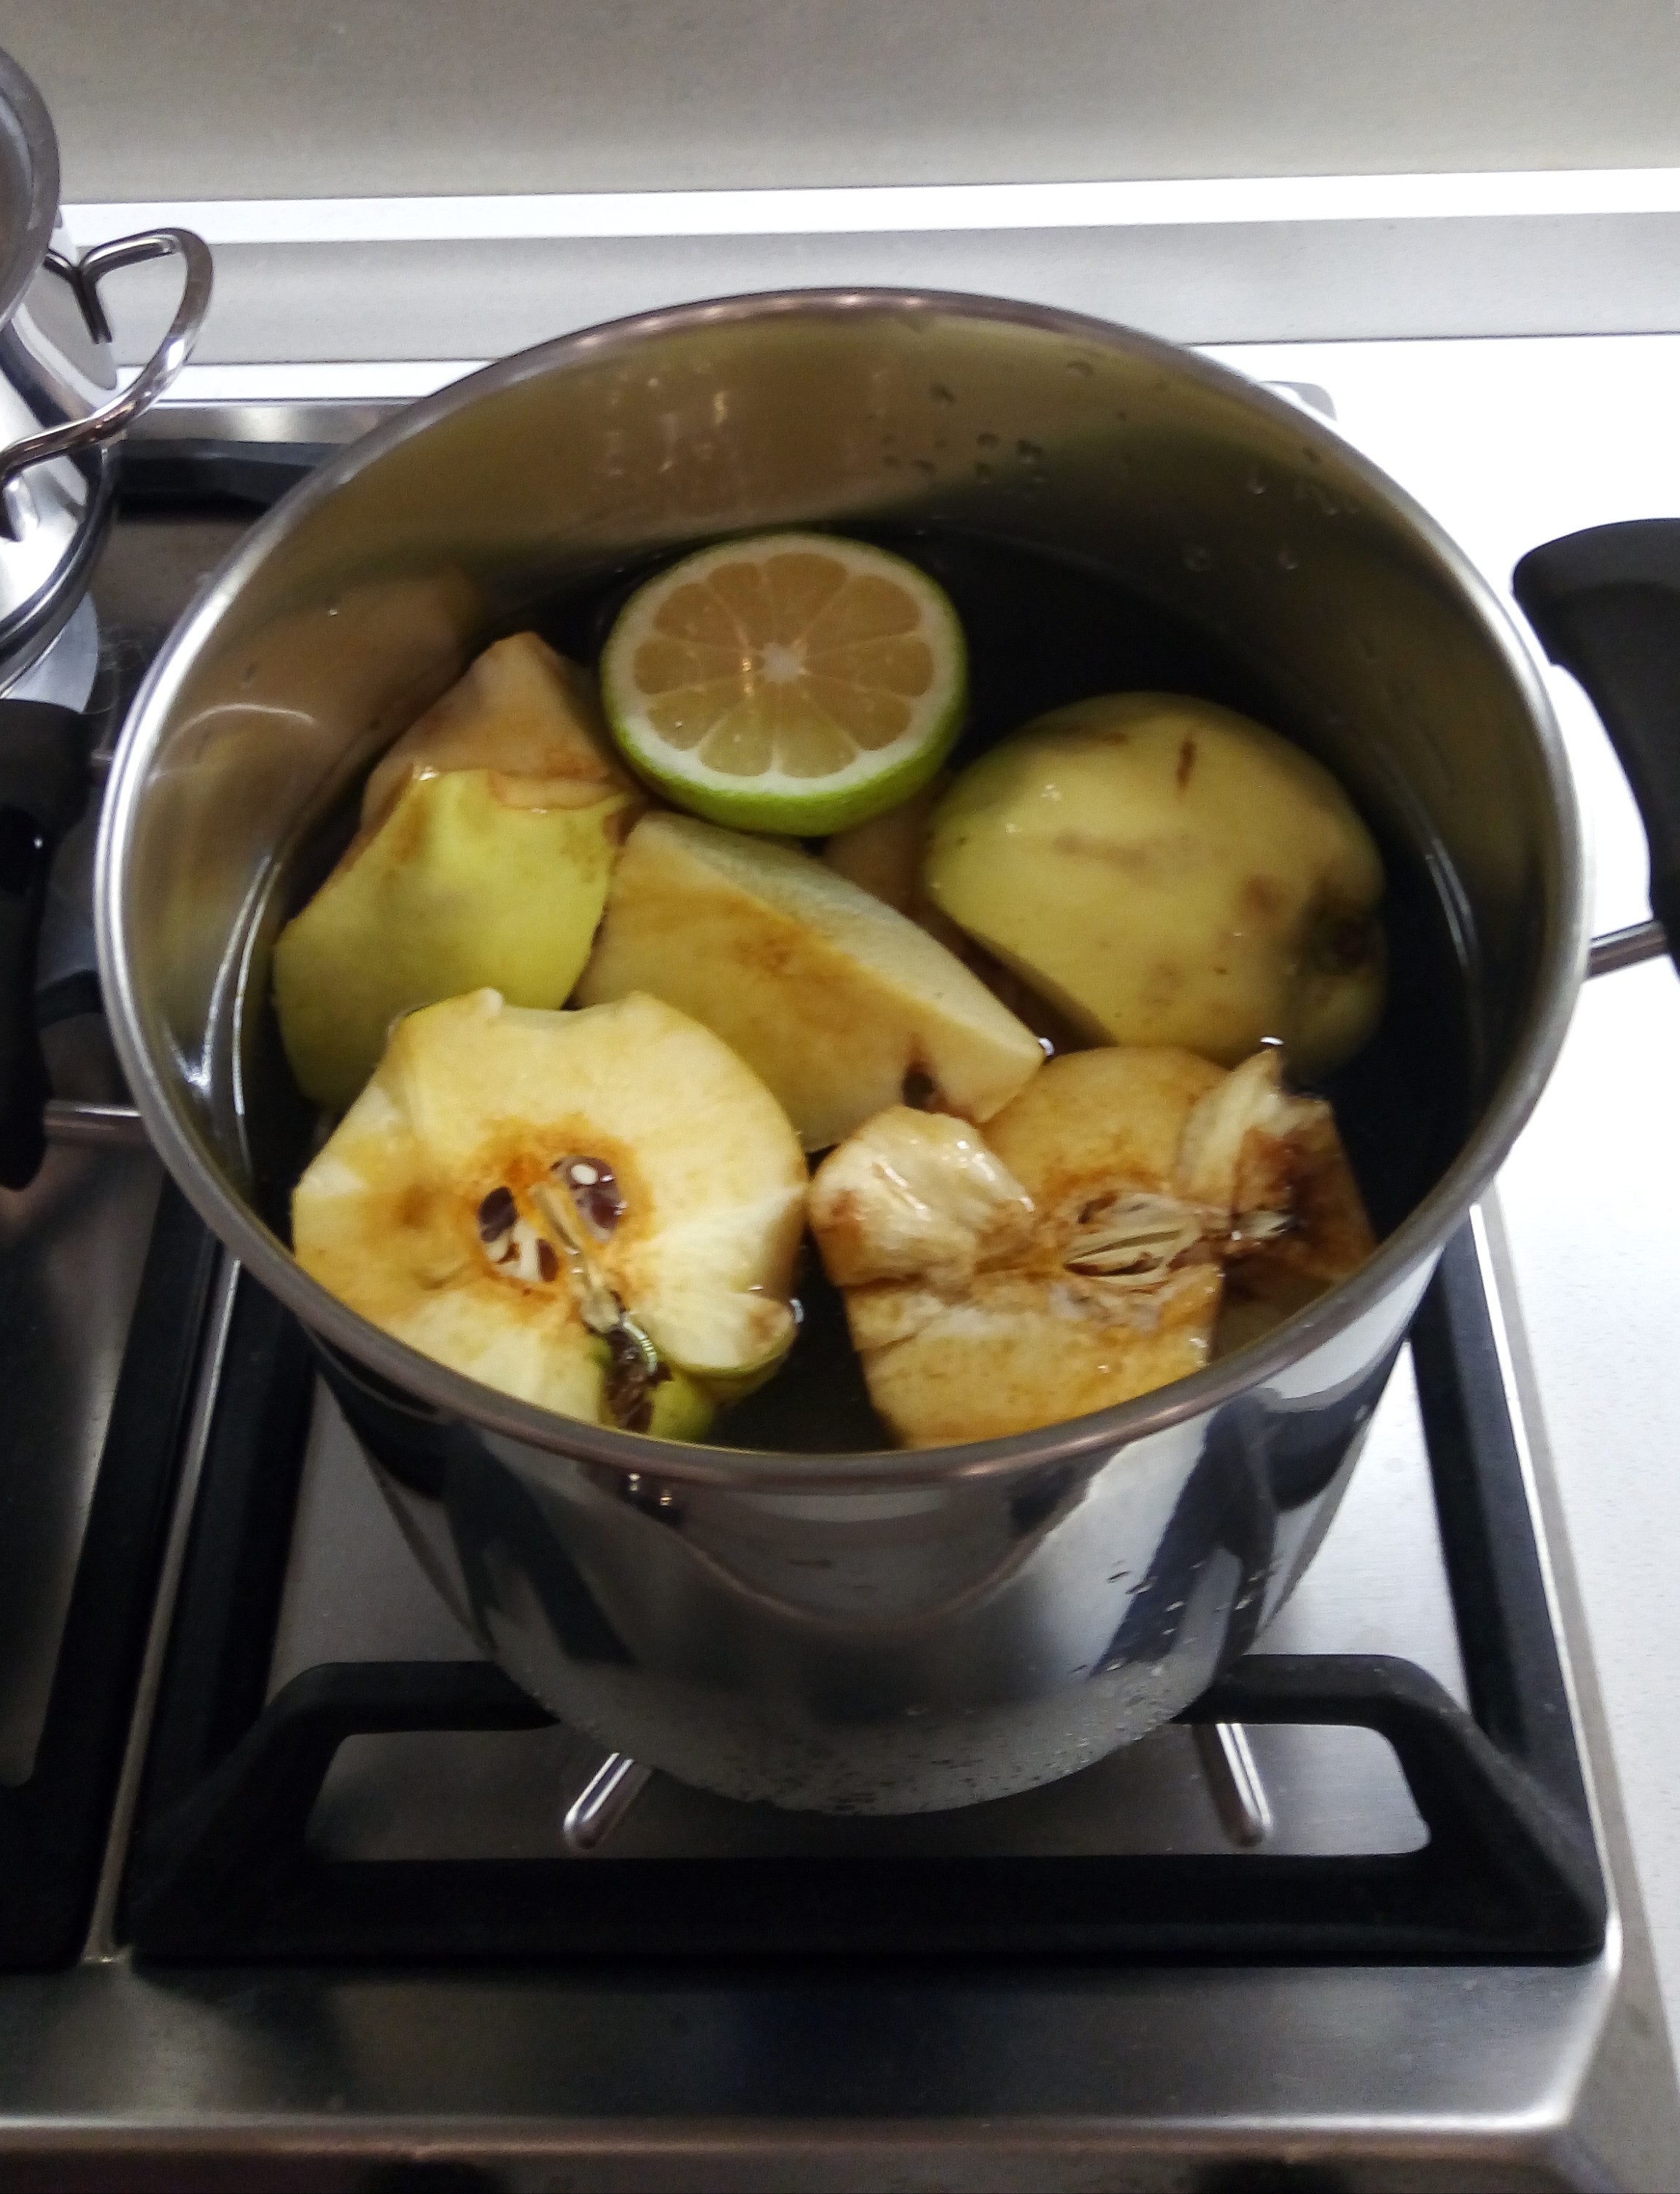 Immergete le vostre mele in una pentola d'acqua con un limone